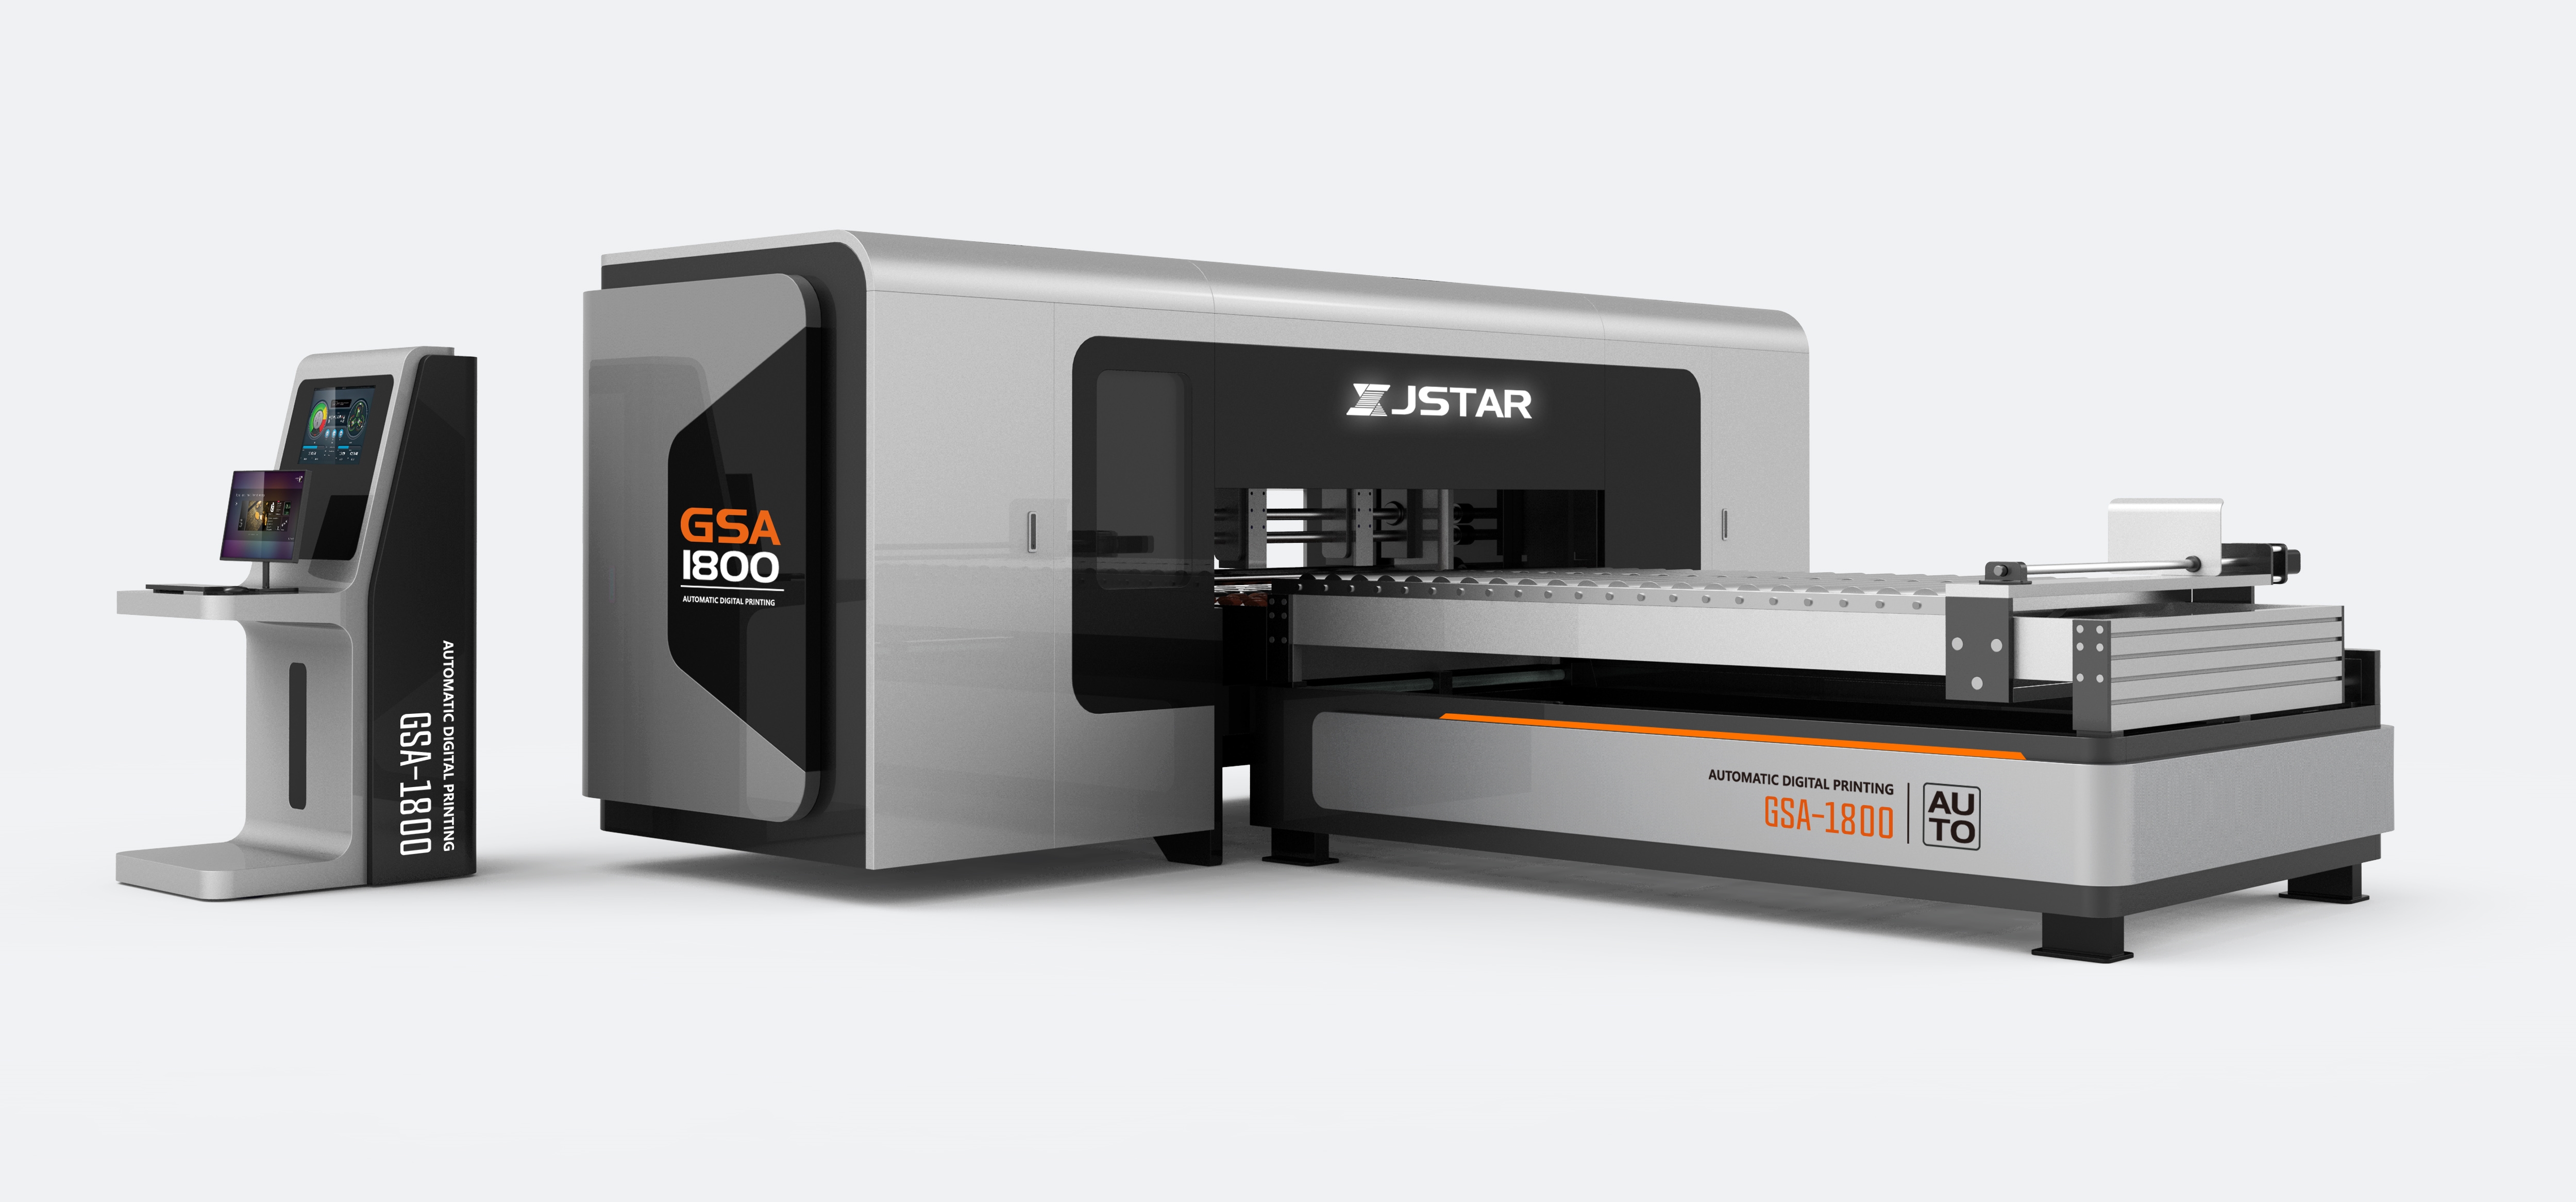 GSA-1800 Automatic digital printing machine